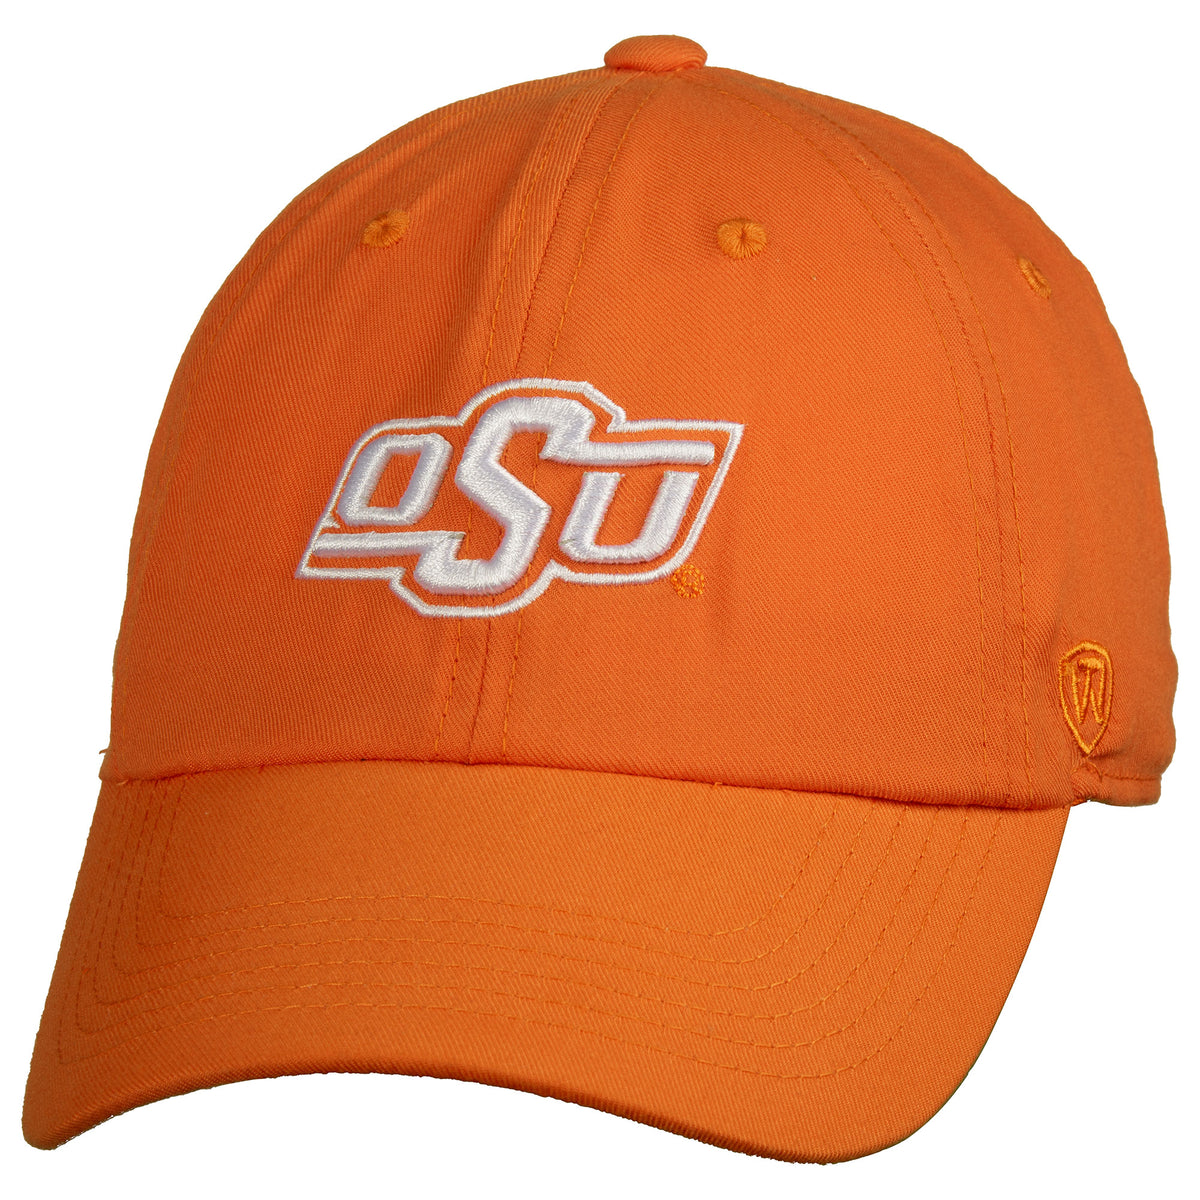 OSU CLASSIC ORANGE HAT - OSUCOH